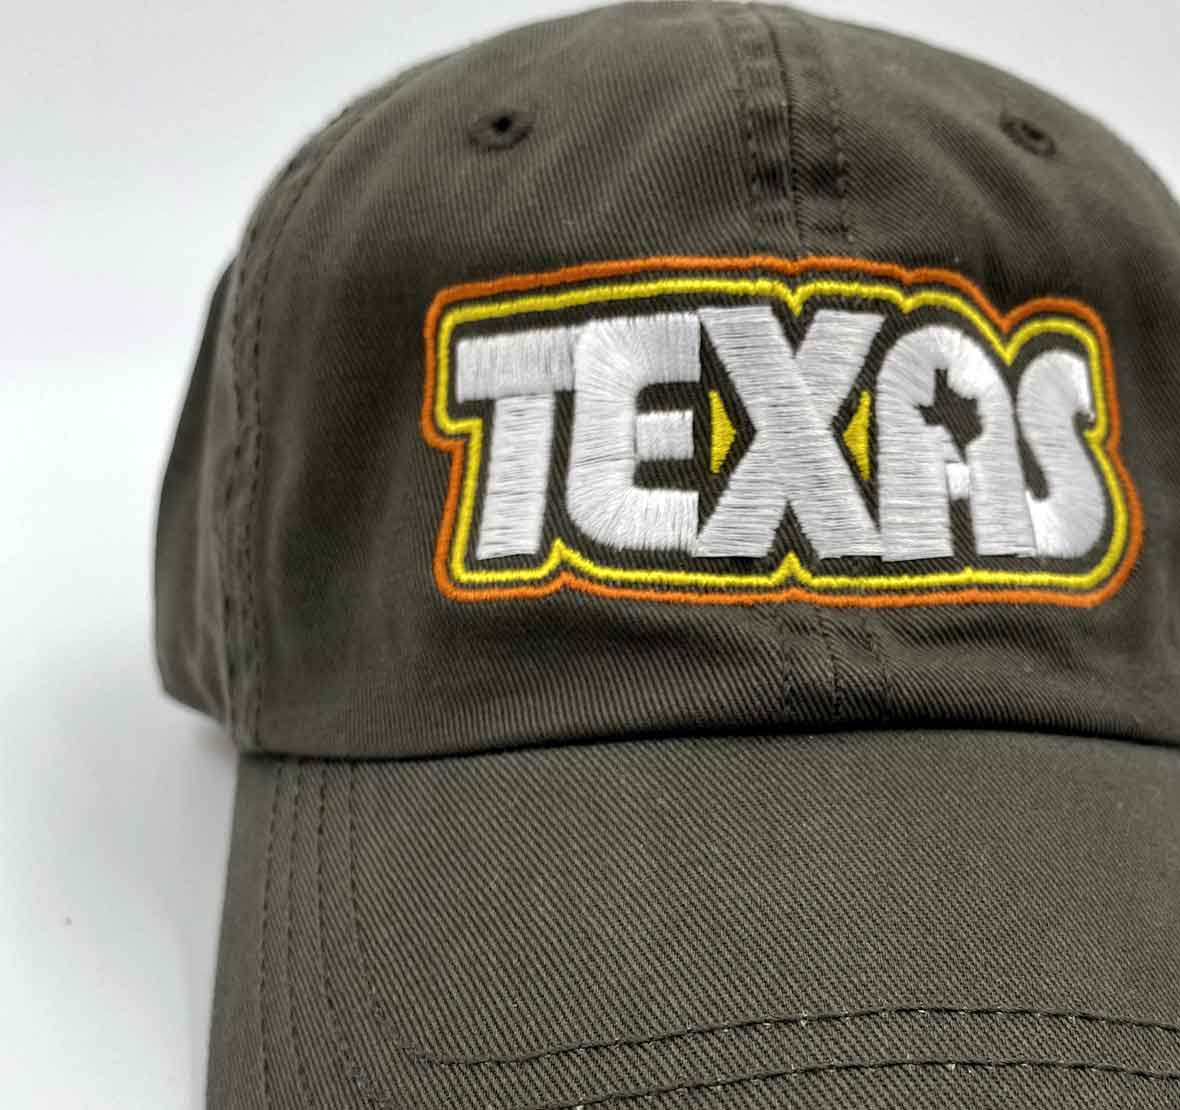 Youth hat, youth cap, texas youth hat, Retro Texas, Austin Texas, texas, youth